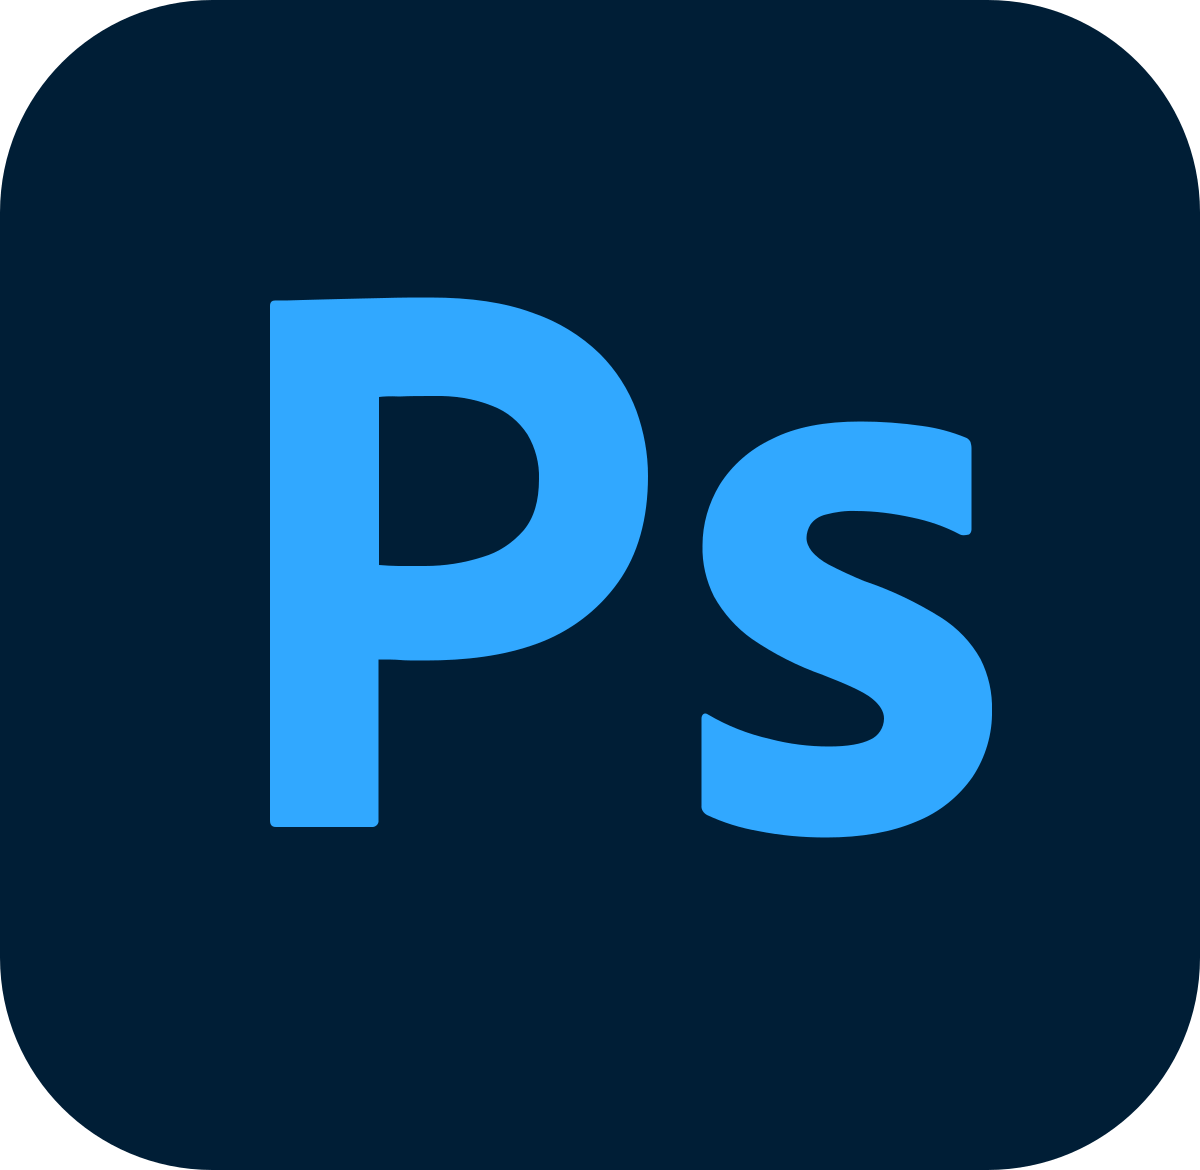 Adobe Photoshop - программа для виндовс 10, которая необходима каждому дизайнеру